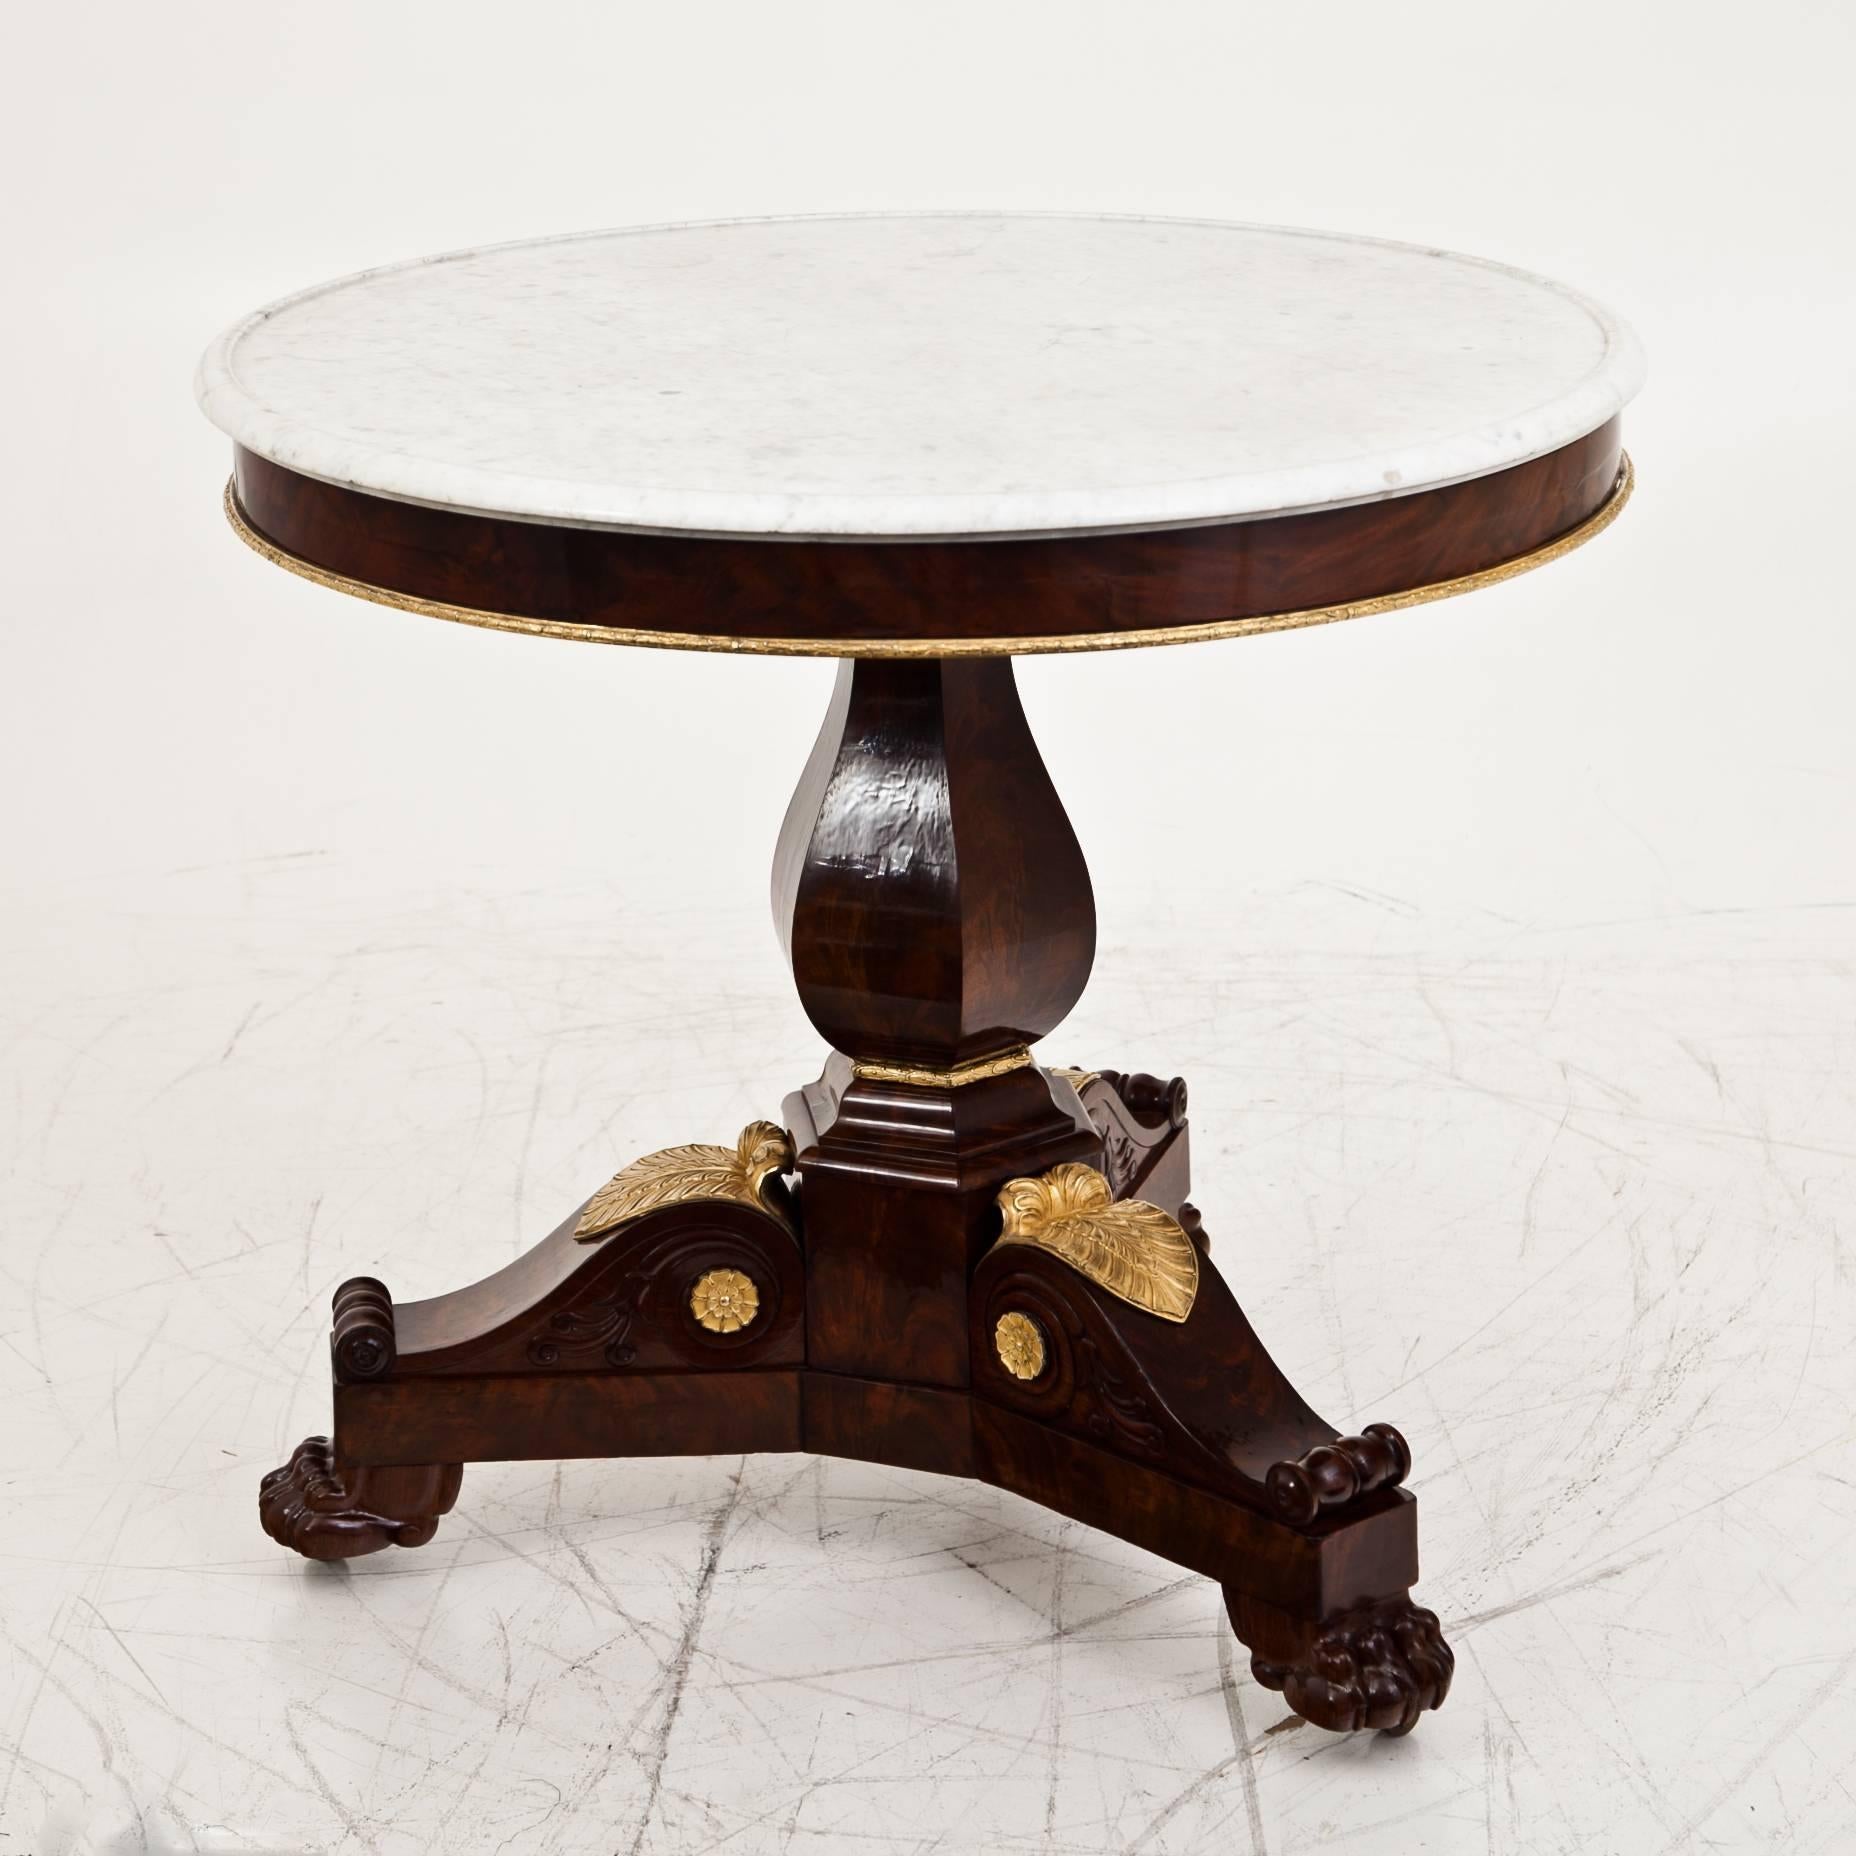 Early 19th Century Charles X Salon Table, circa 1820